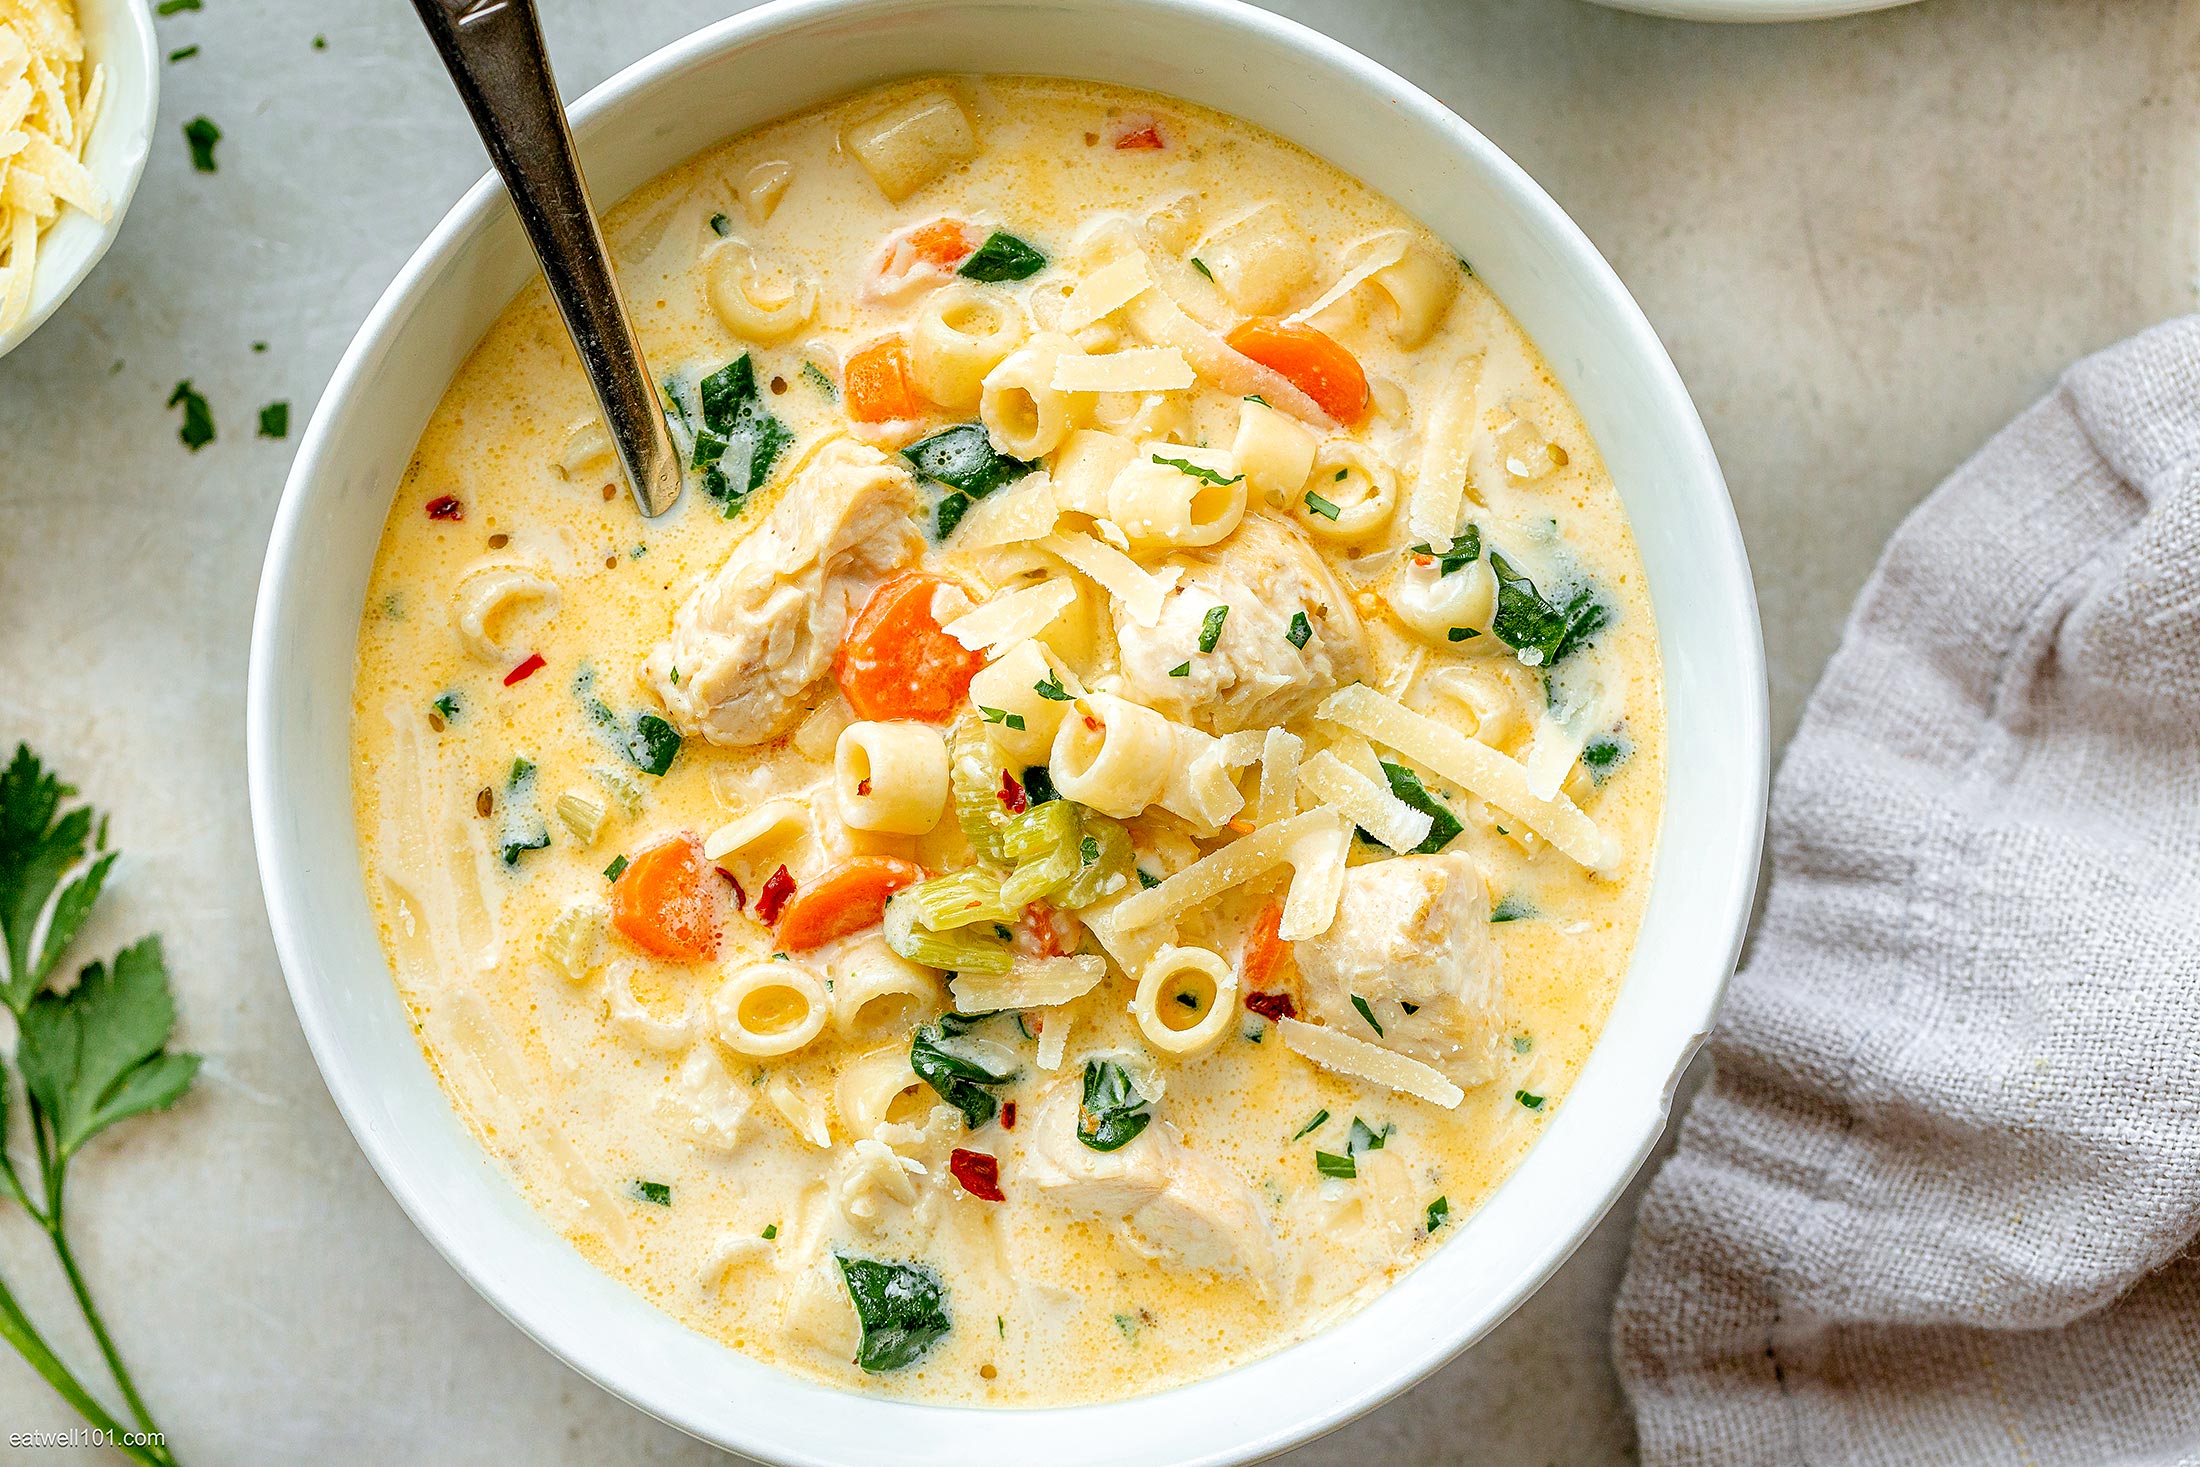 https://www.eatwell101.com/wp-content/uploads/2020/02/chicken-soup-recipe-3.jpg